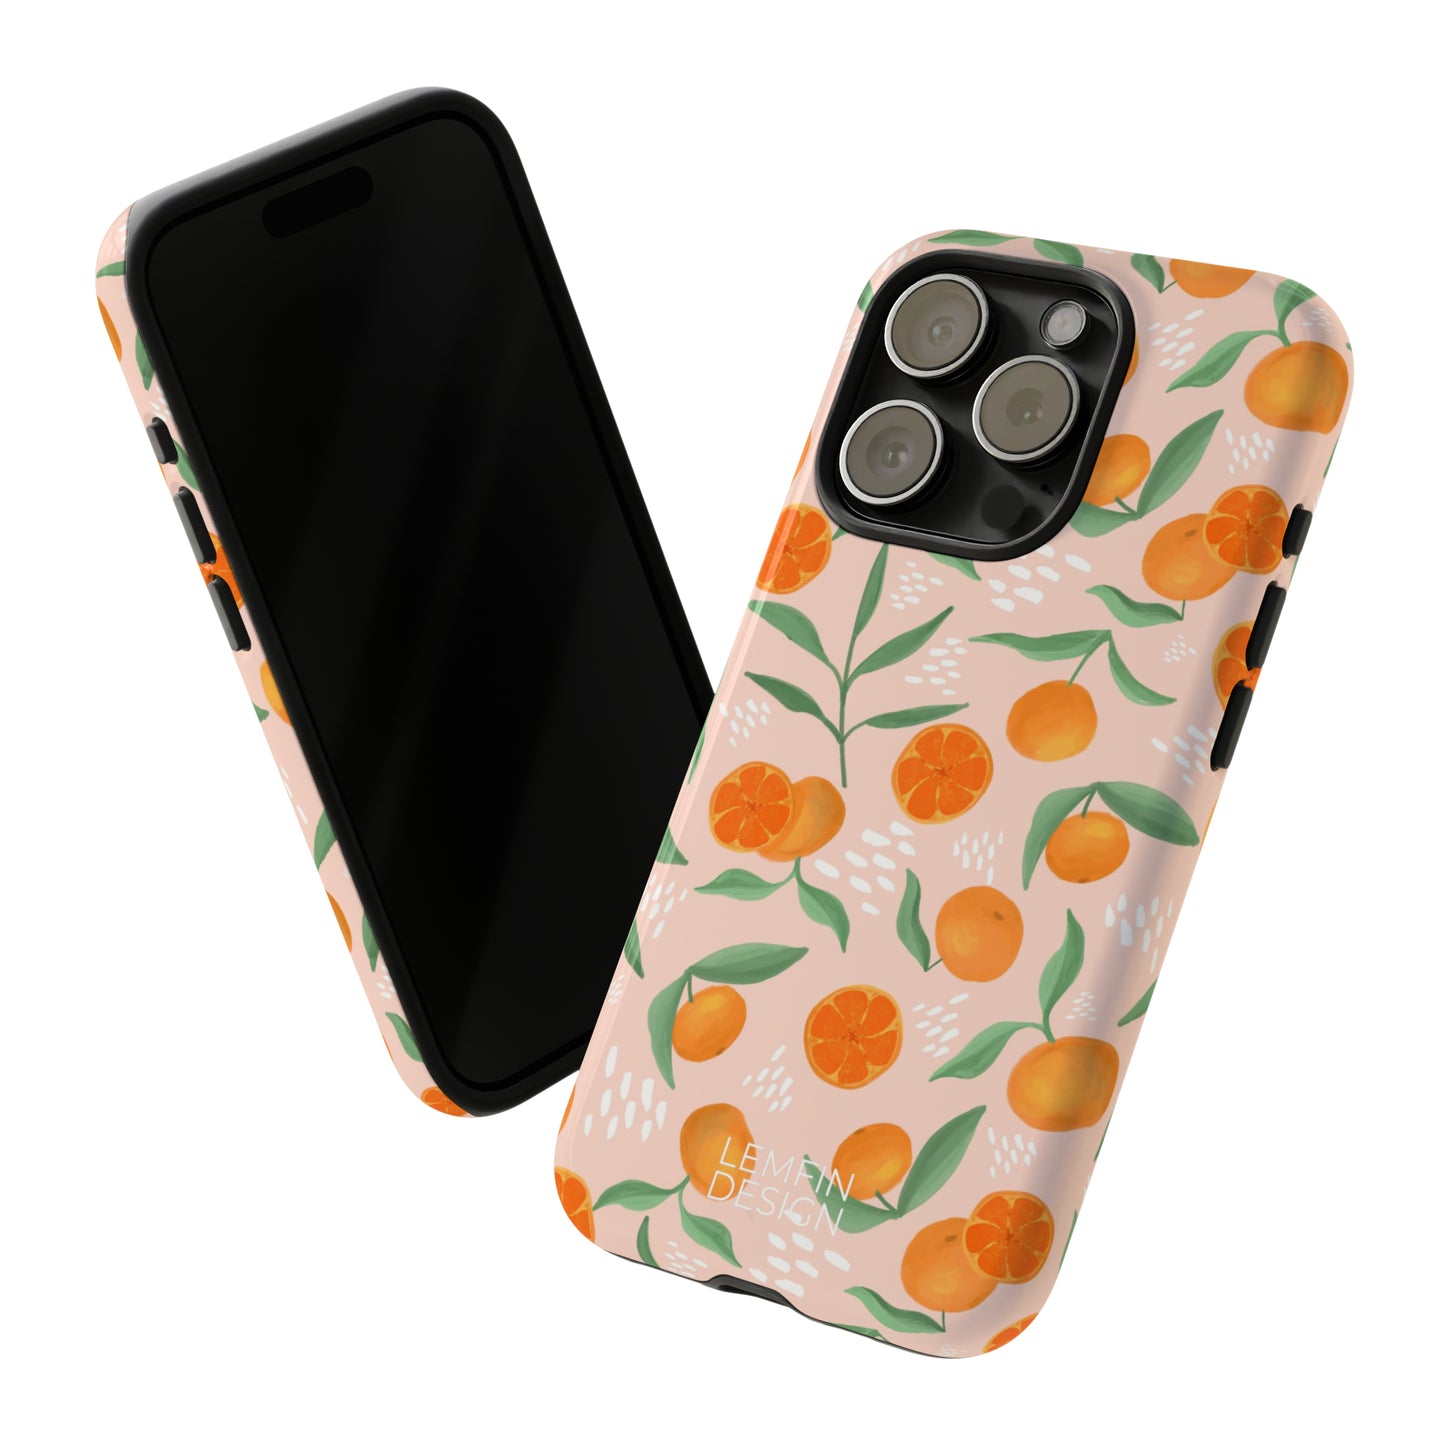 Mandarins| Pink background phone case